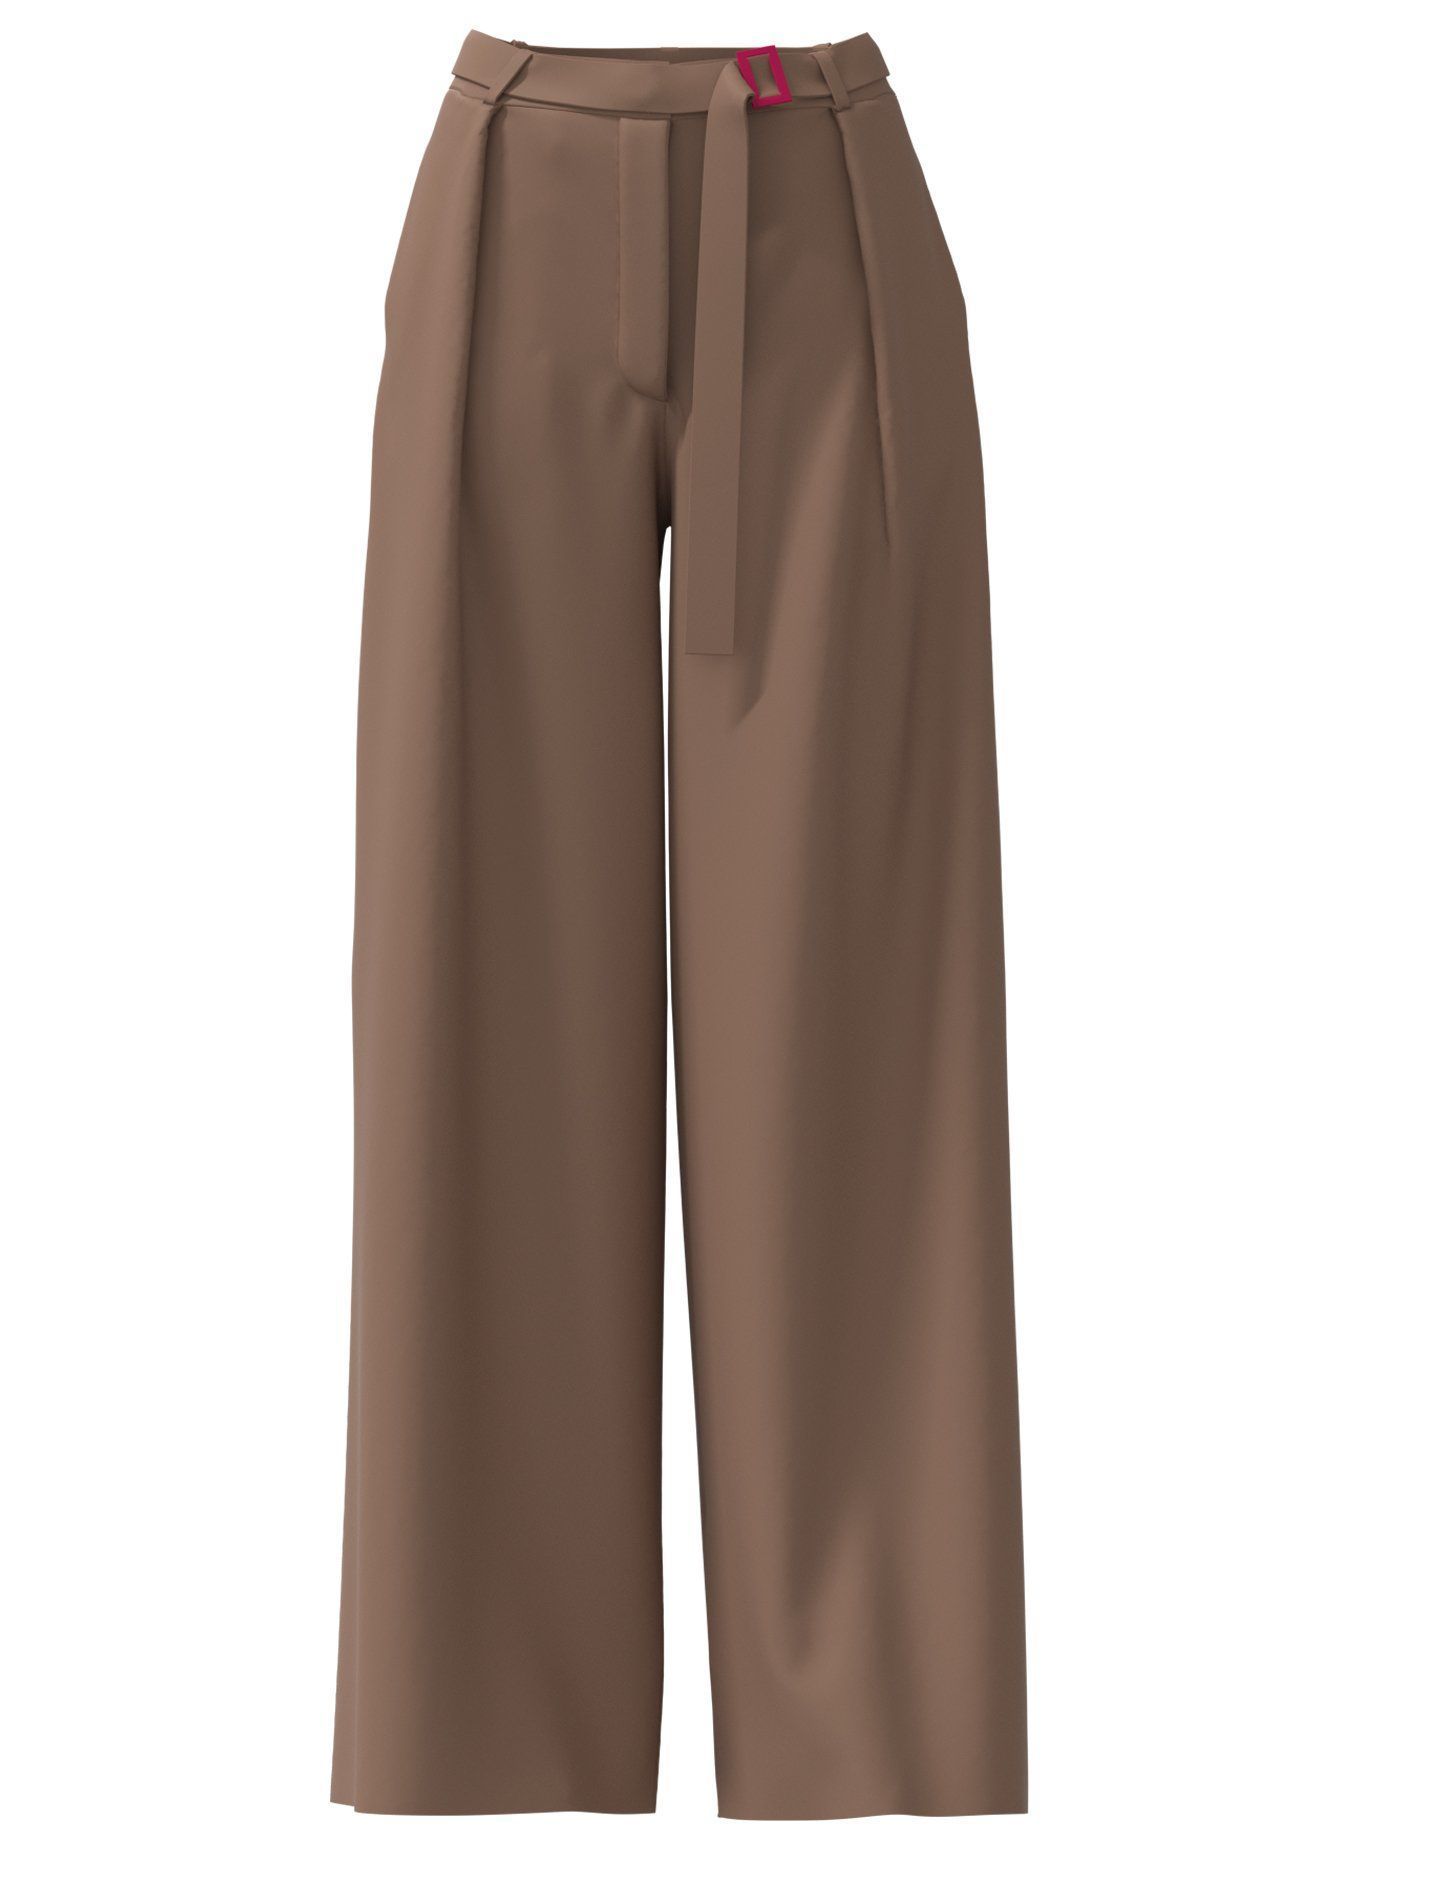 Beige Trousers: Versatile Staples for Any Wardrobe